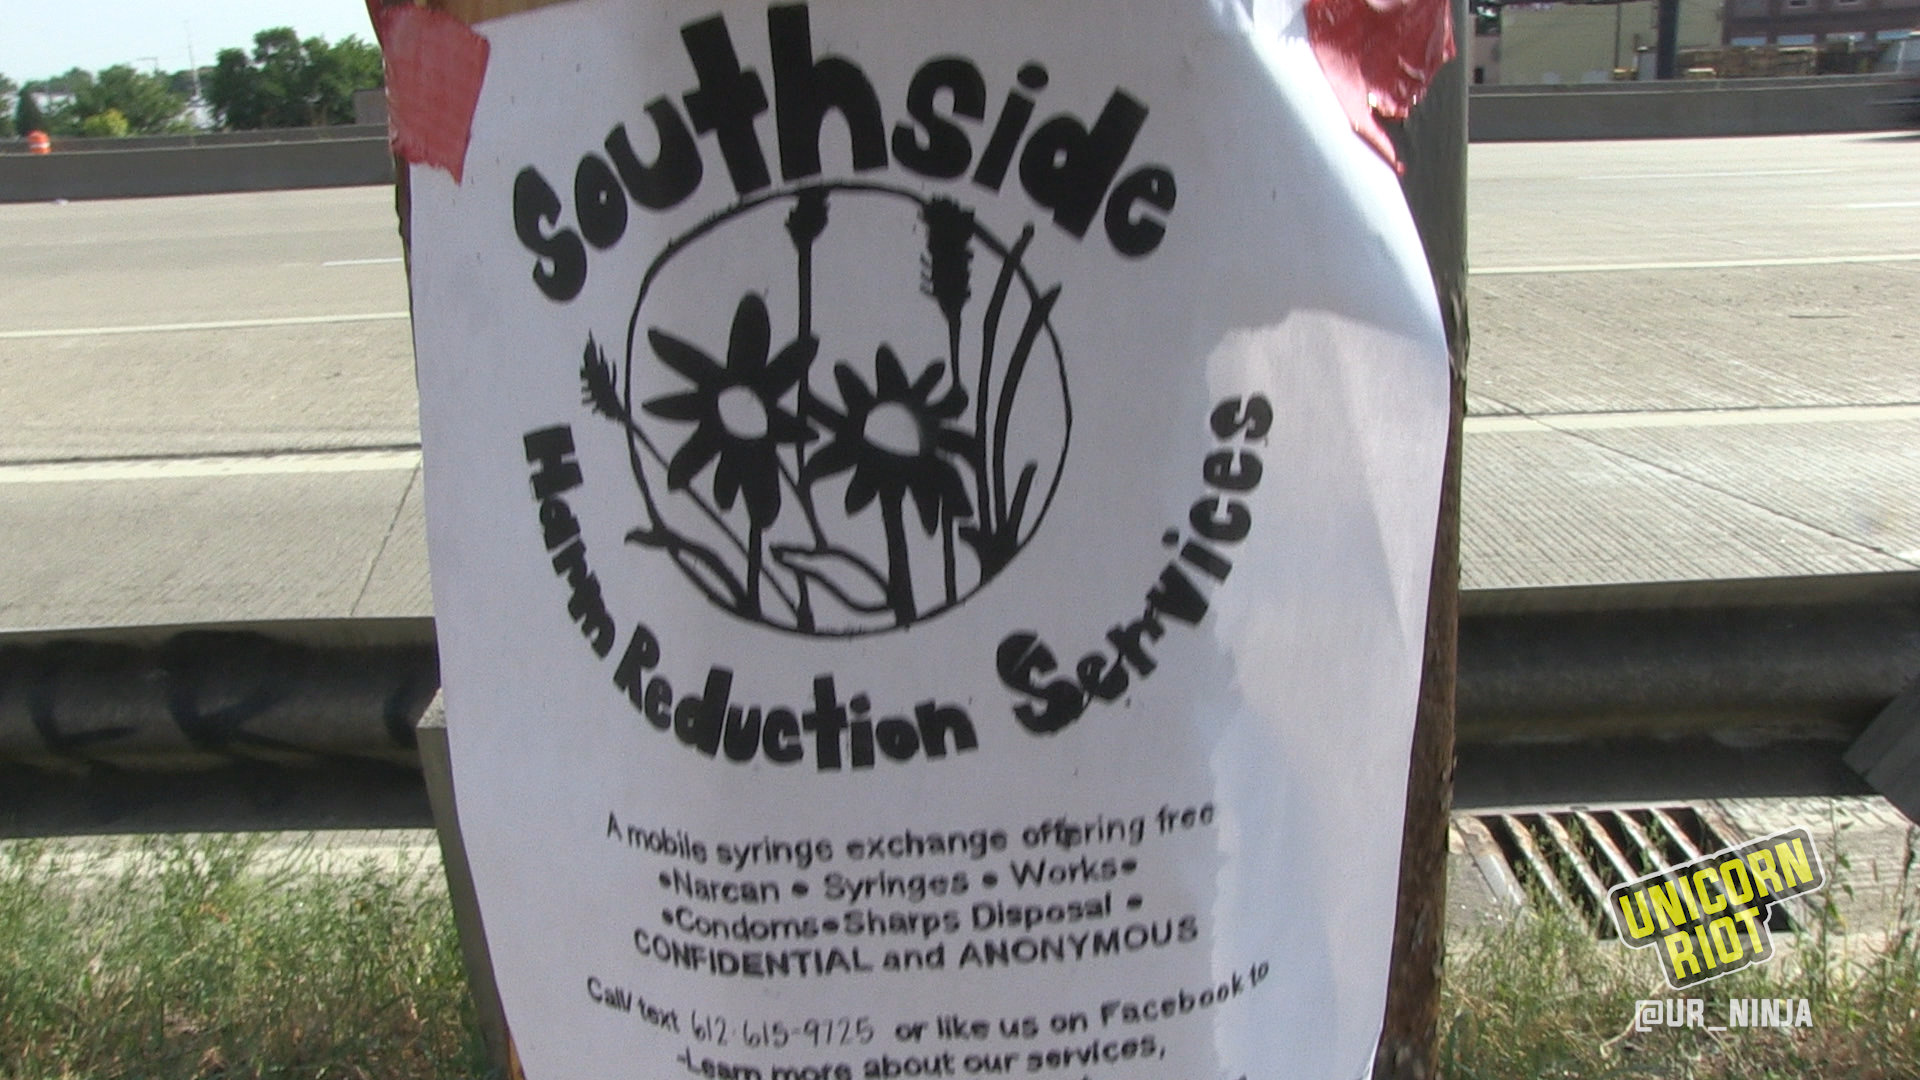 Southside harm reduction flyer